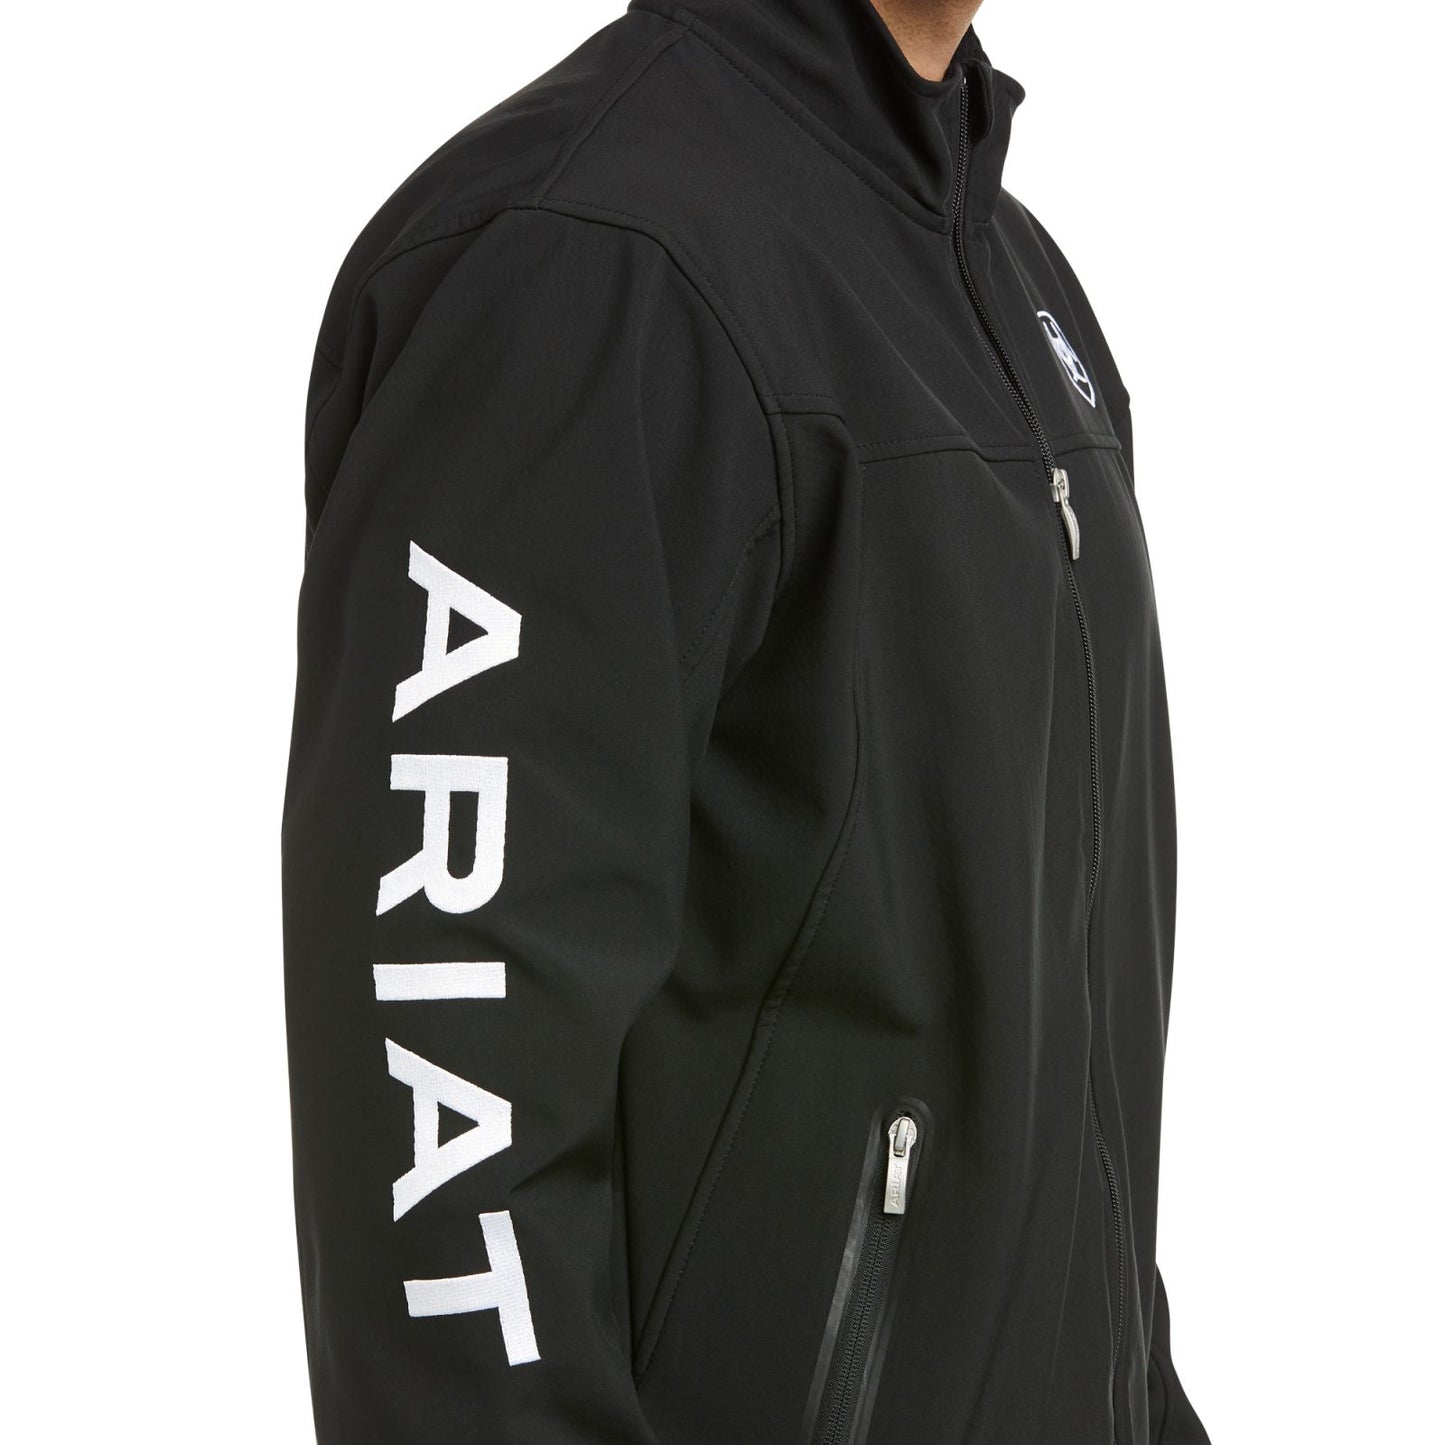 Ariat Team Black Softshell Jacket